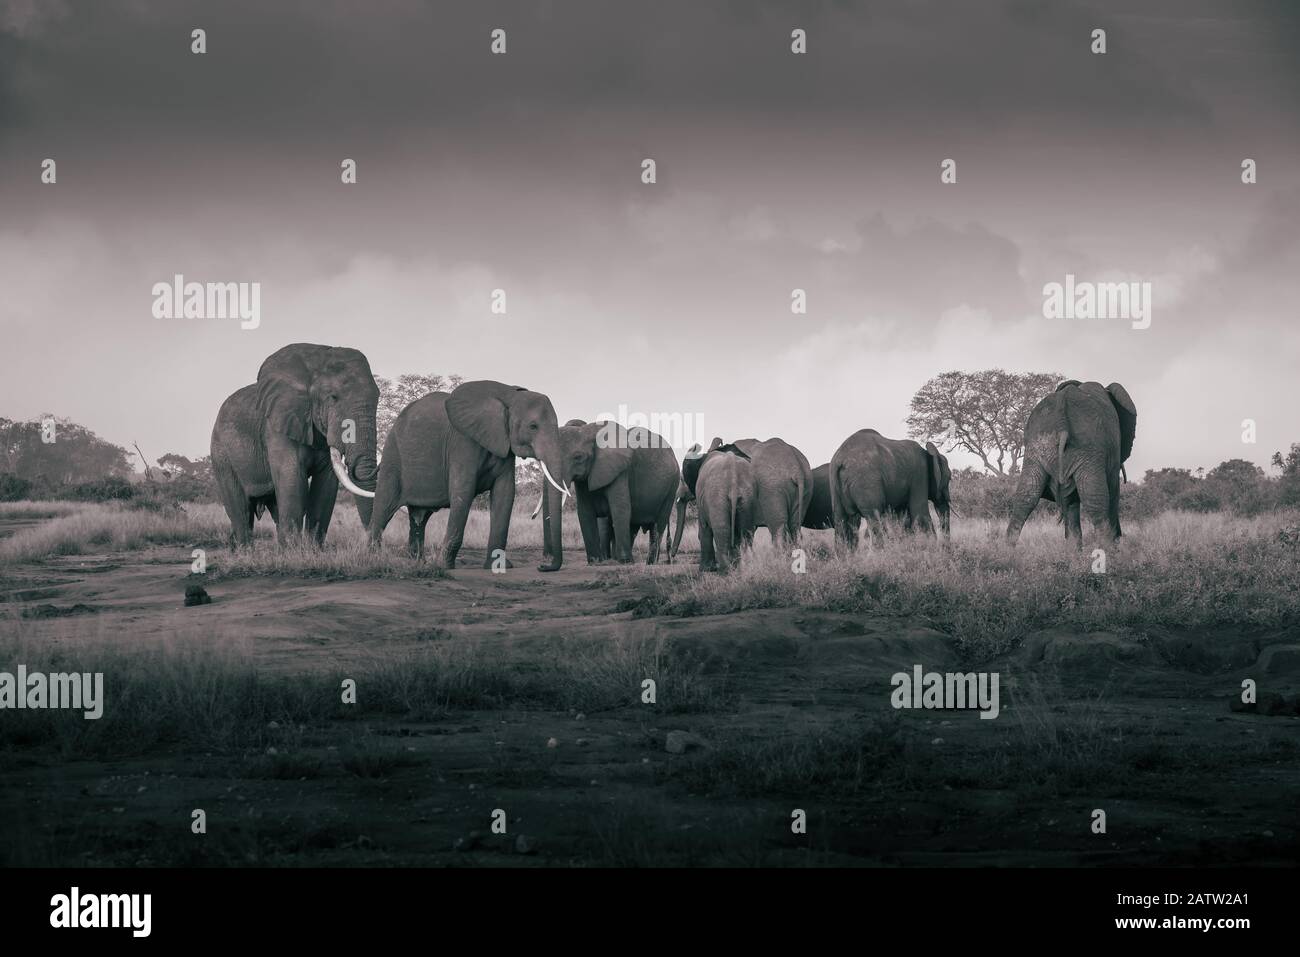 elephant family in the savanna, safari in Africa, Kenya, Tanzania, Uganda elephants fighting in the national park Hunting in Botswana hunt elephants Stock Photo